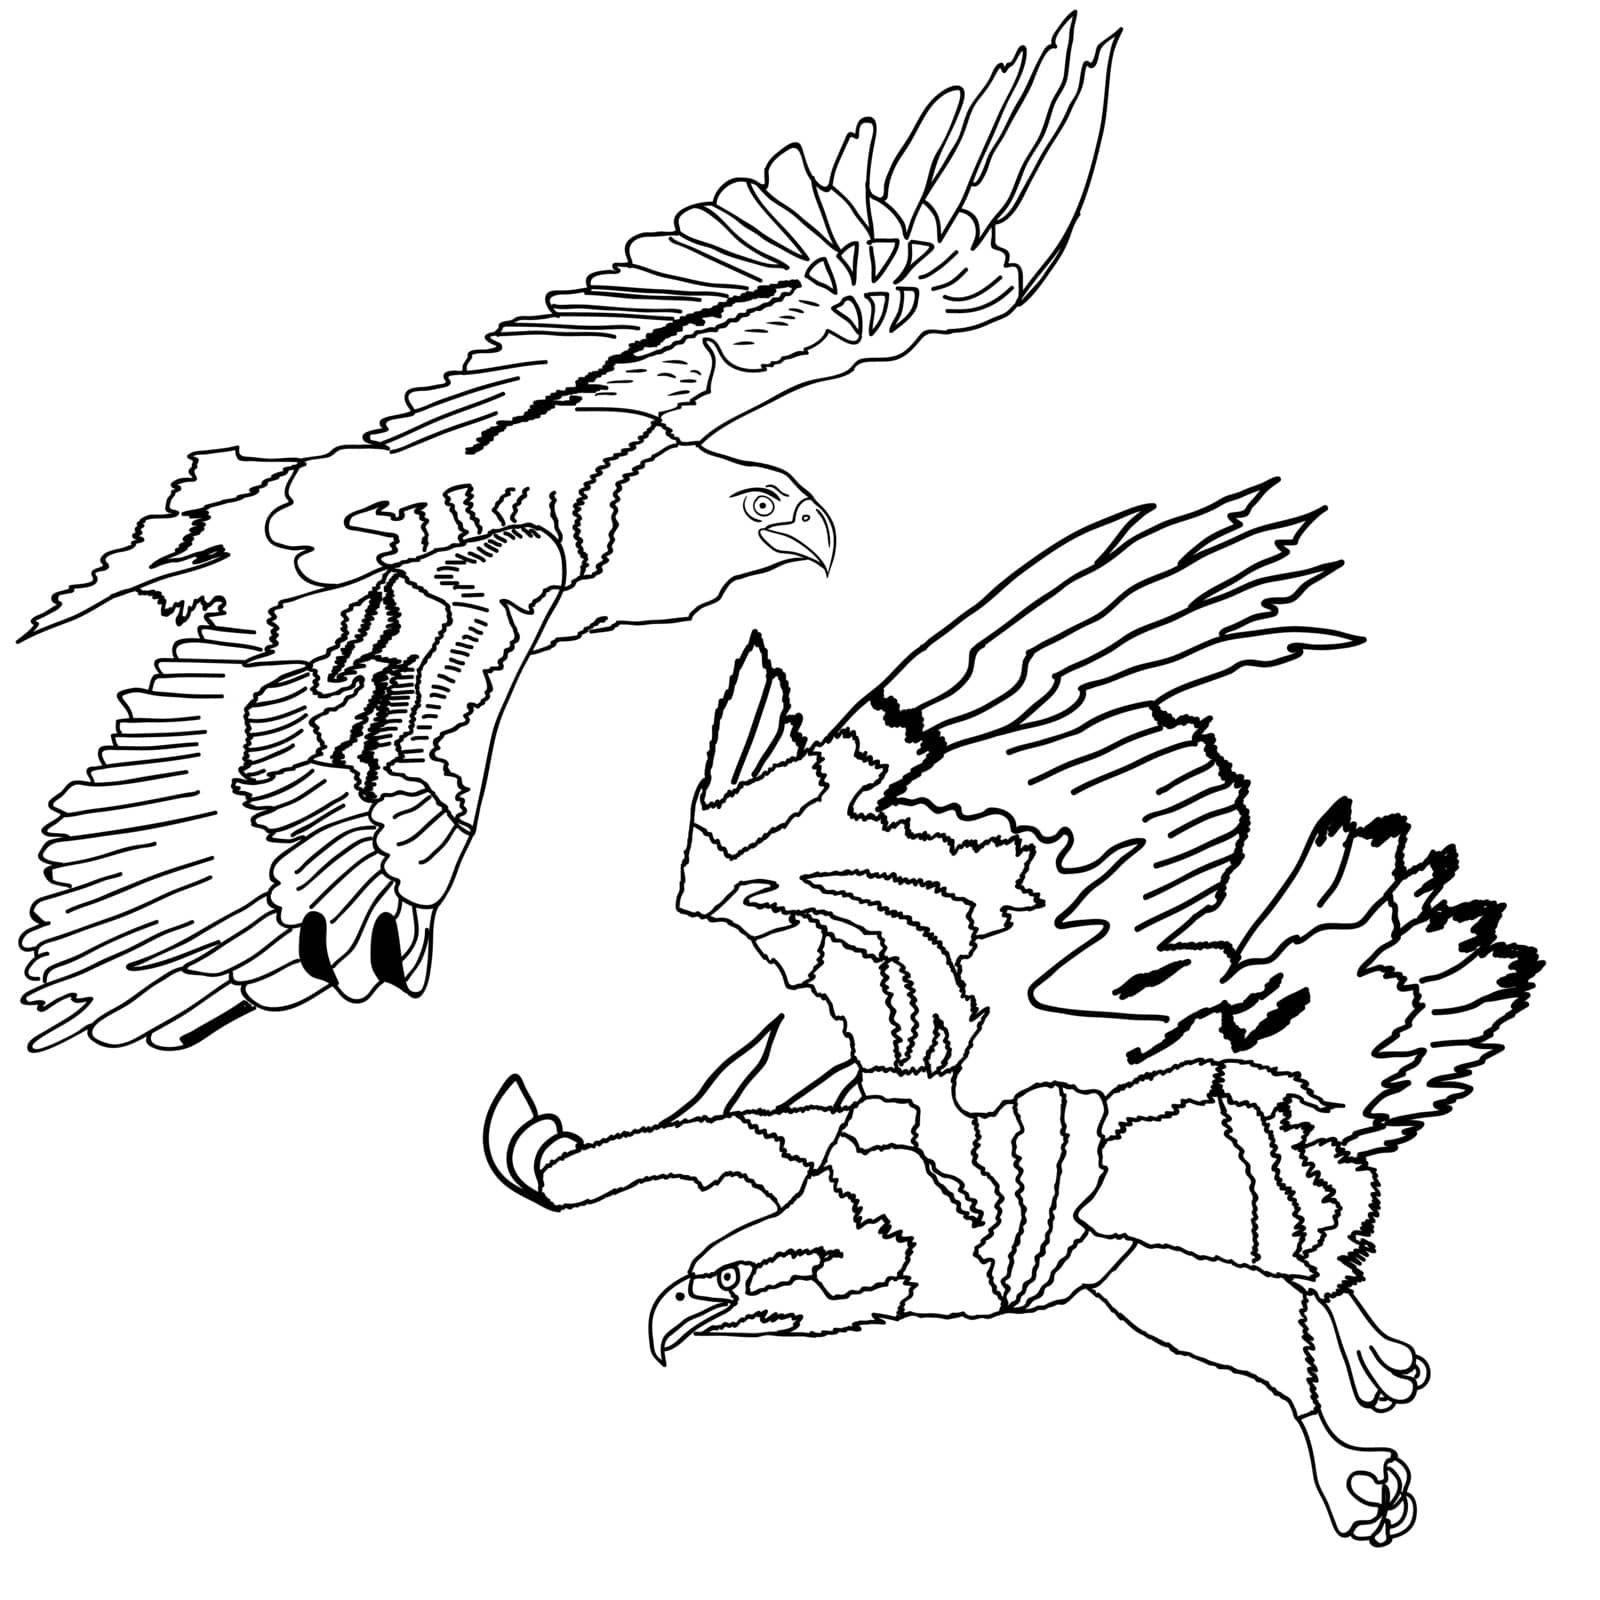 Eagles symbols and tattoo, vector illustration.